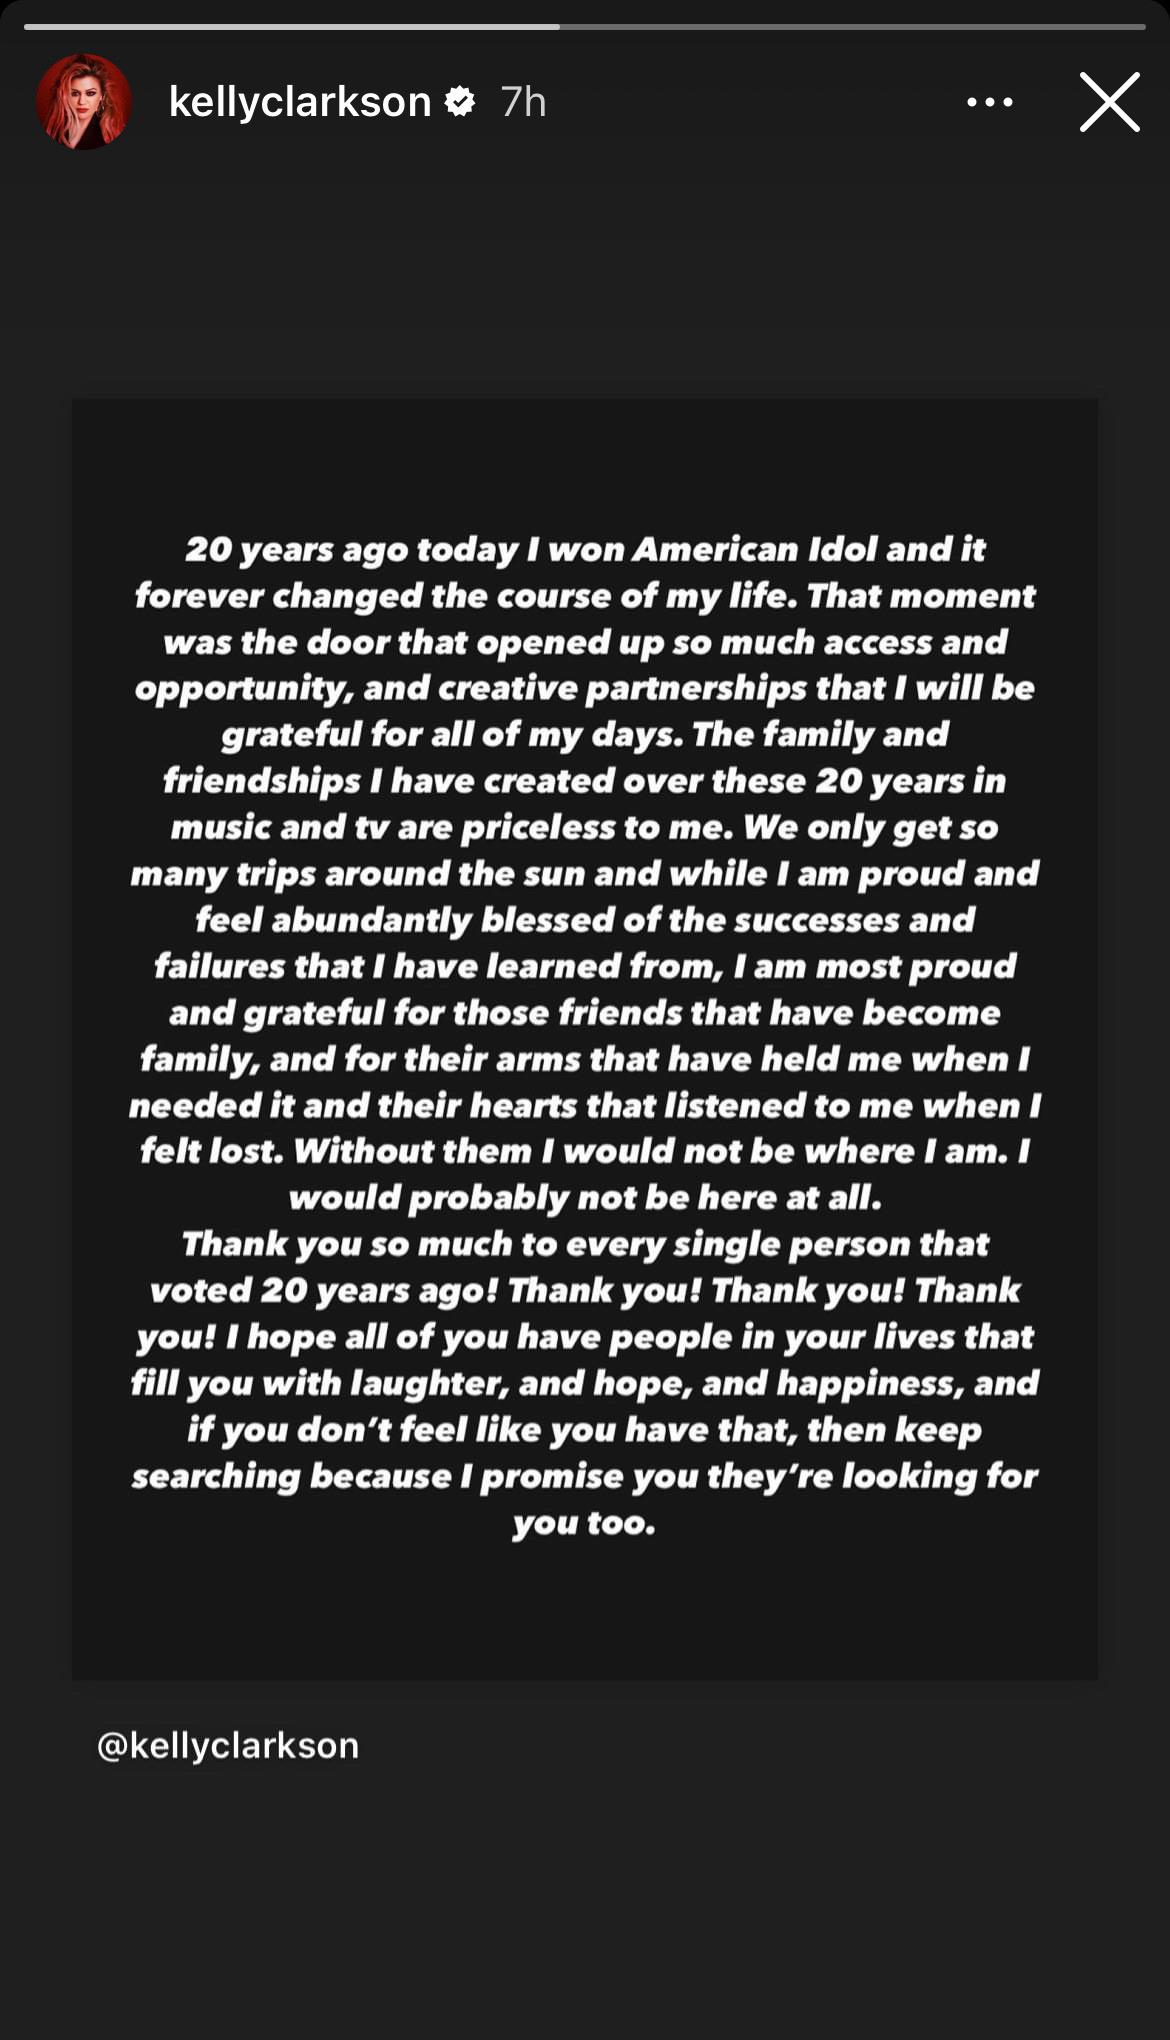 Kelly Clarkson's post on her Instagram story